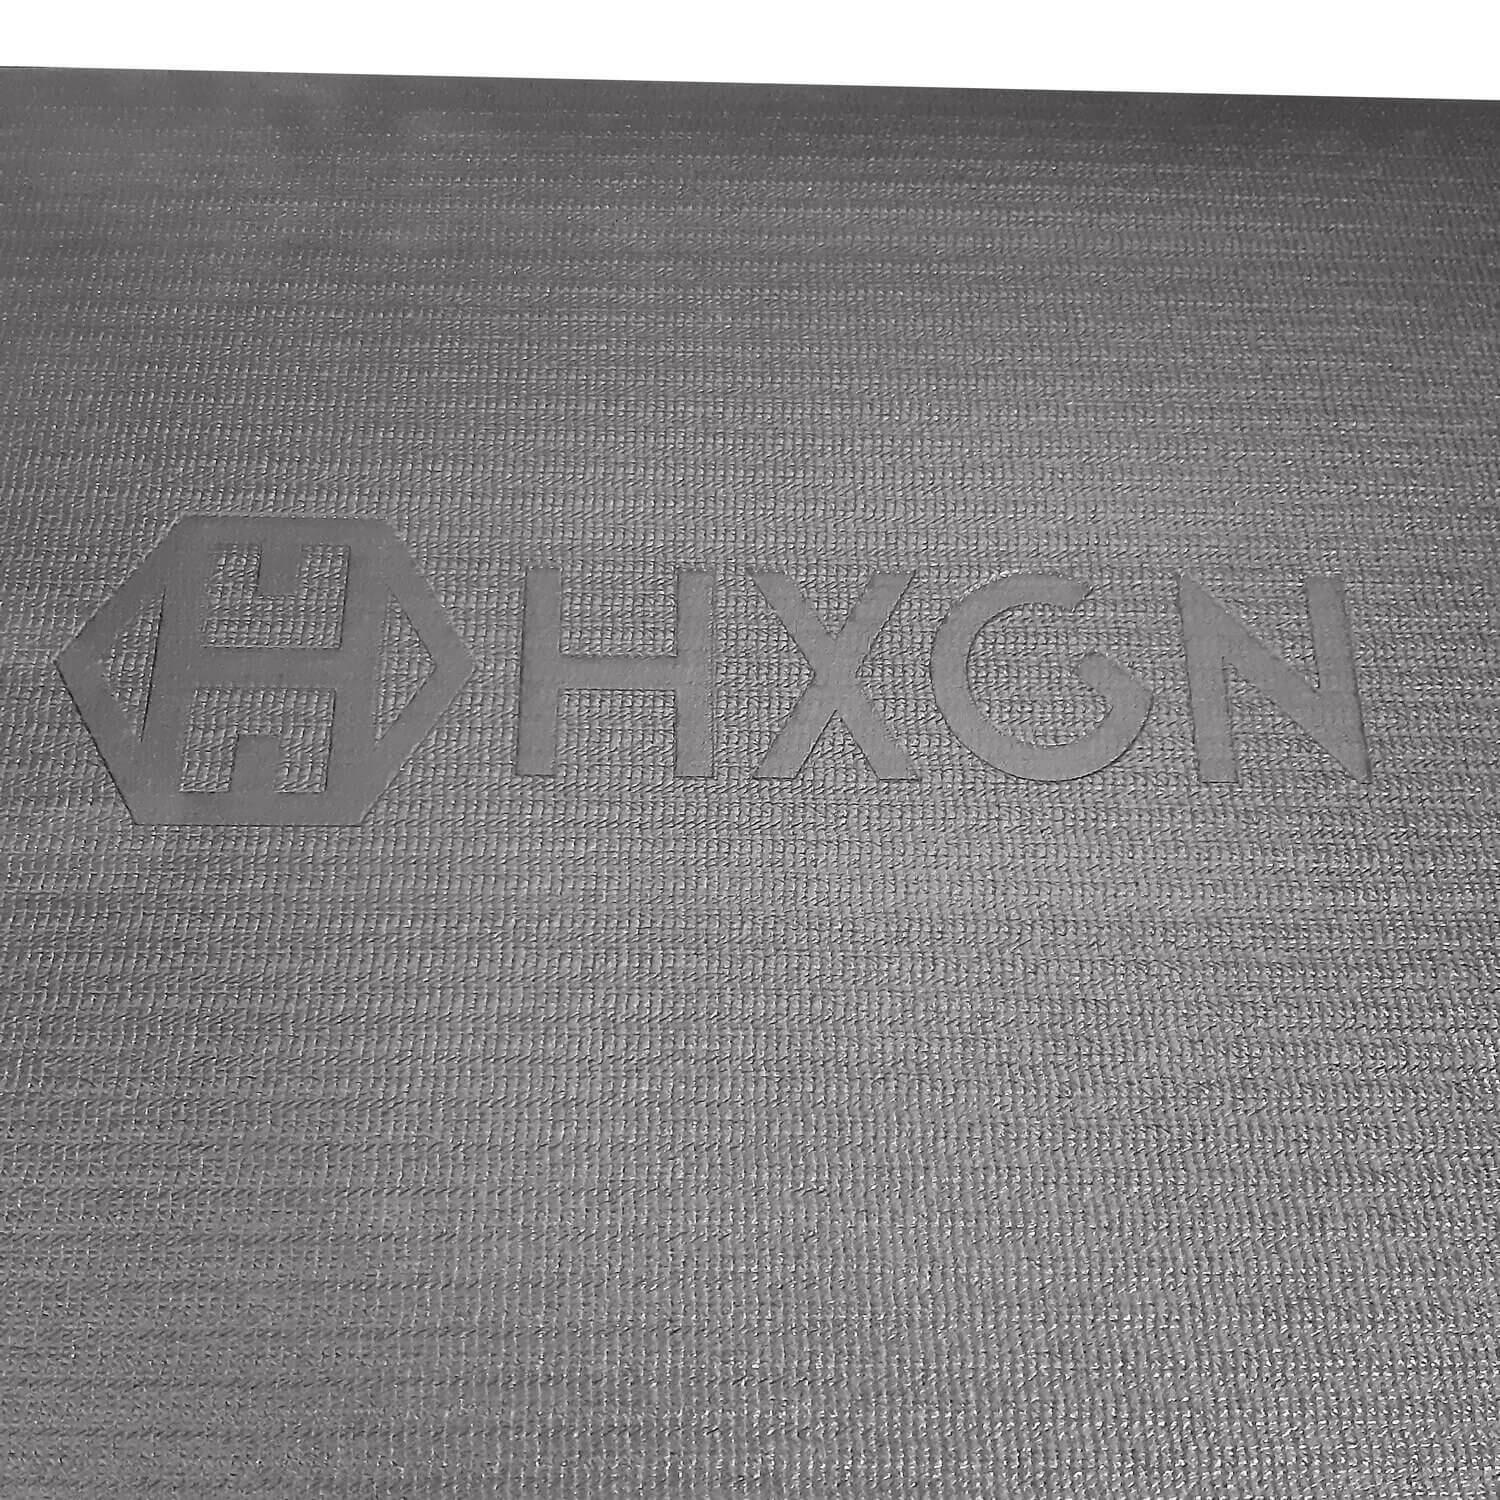 HXGN Gym Floor Equipment Mat 5/5